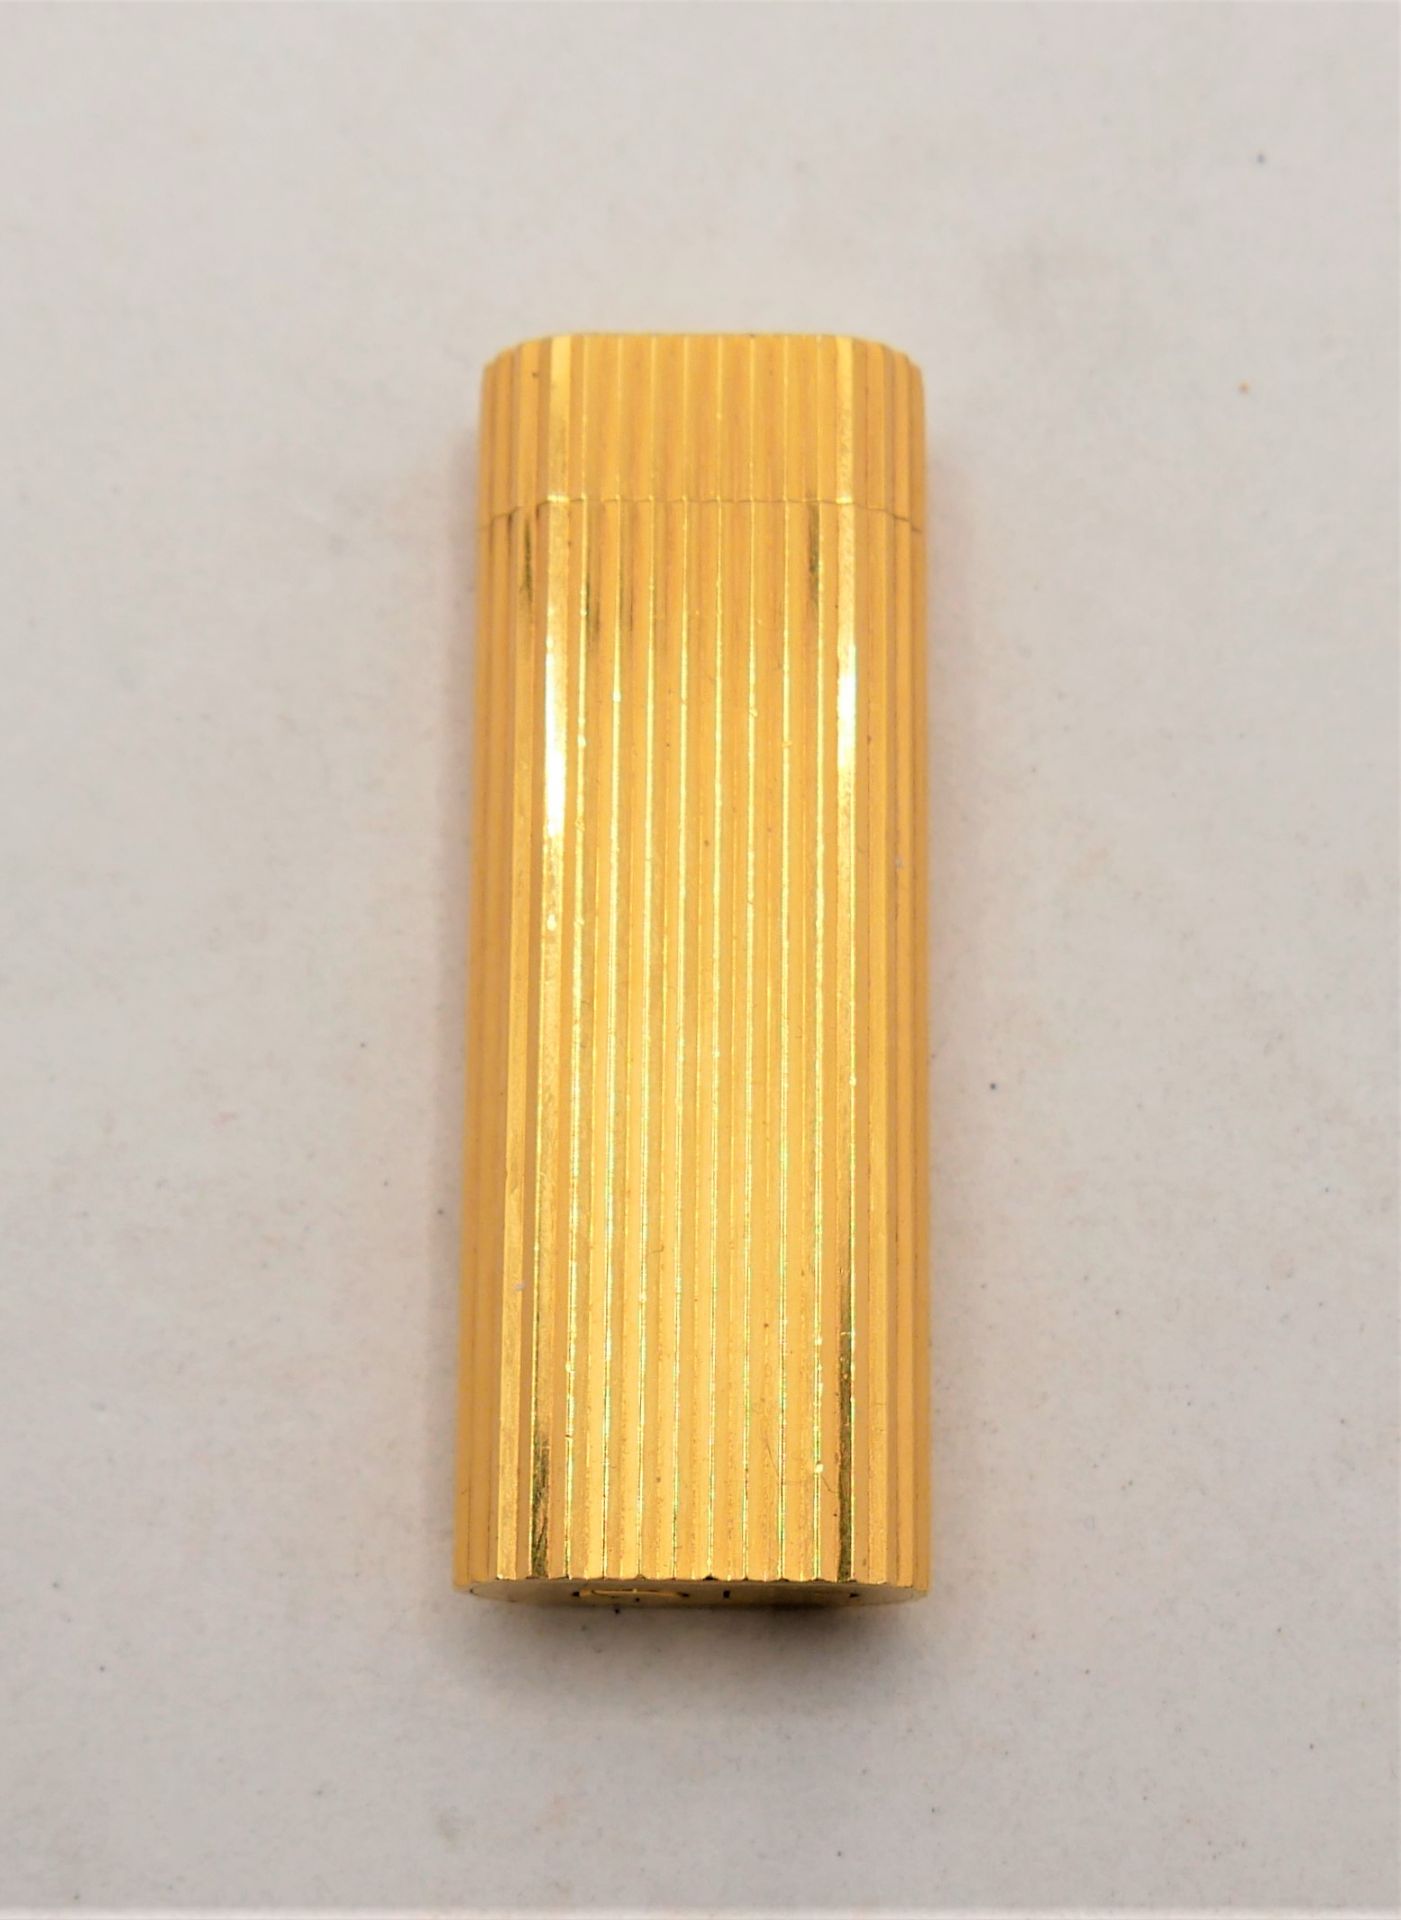 Cartier Paris Feuerzeug vergoldet, Plaque Org, Nr. 199 29 M, Swiss Made. Höhe ca. 6,8 cm. Funktion